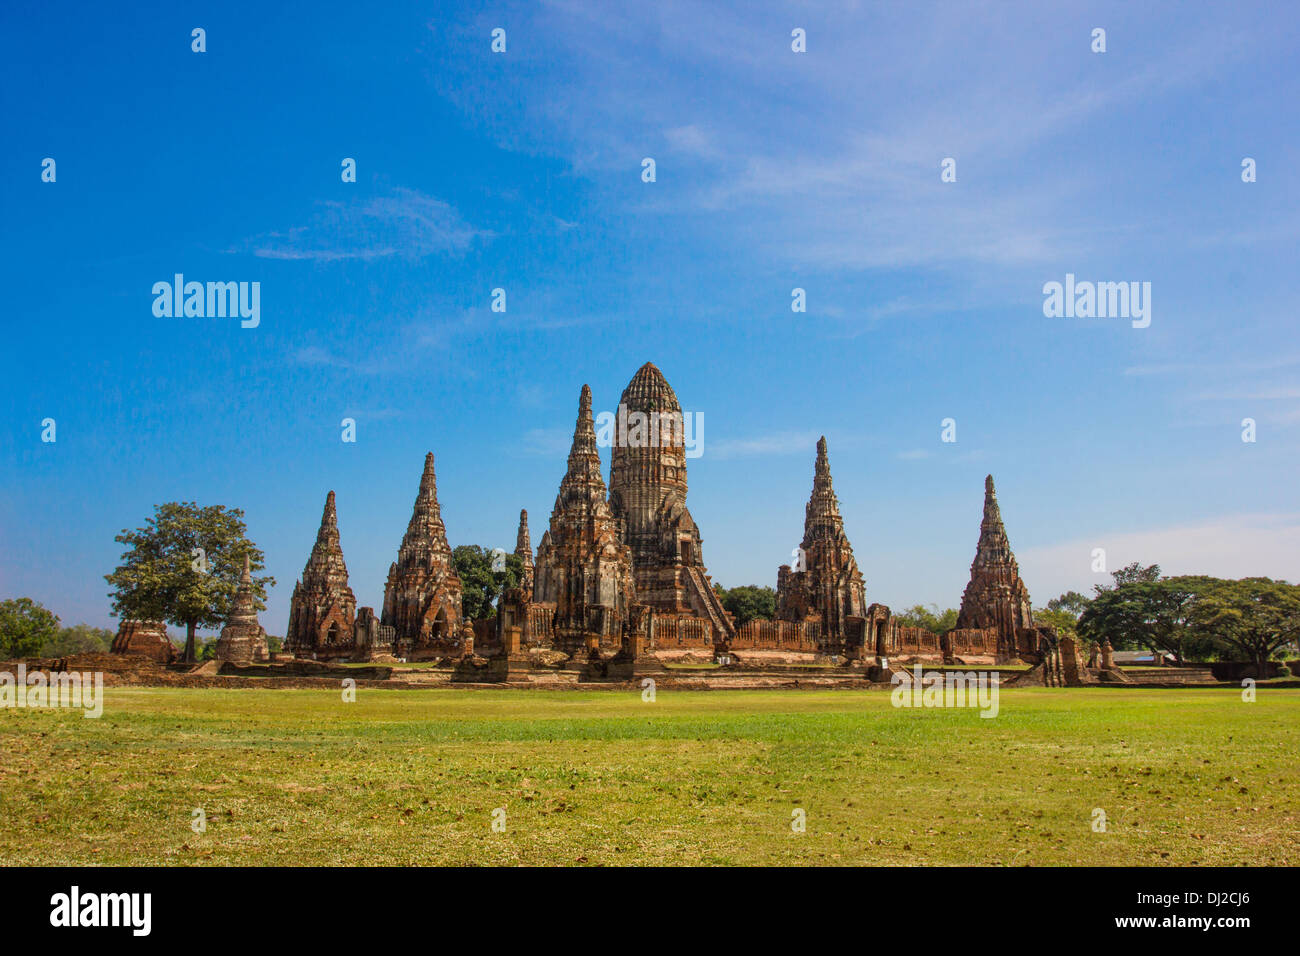 Wat Chaiwatthanaram,Tem ple of Ayutthaya Historical, Thailand Stock Photo